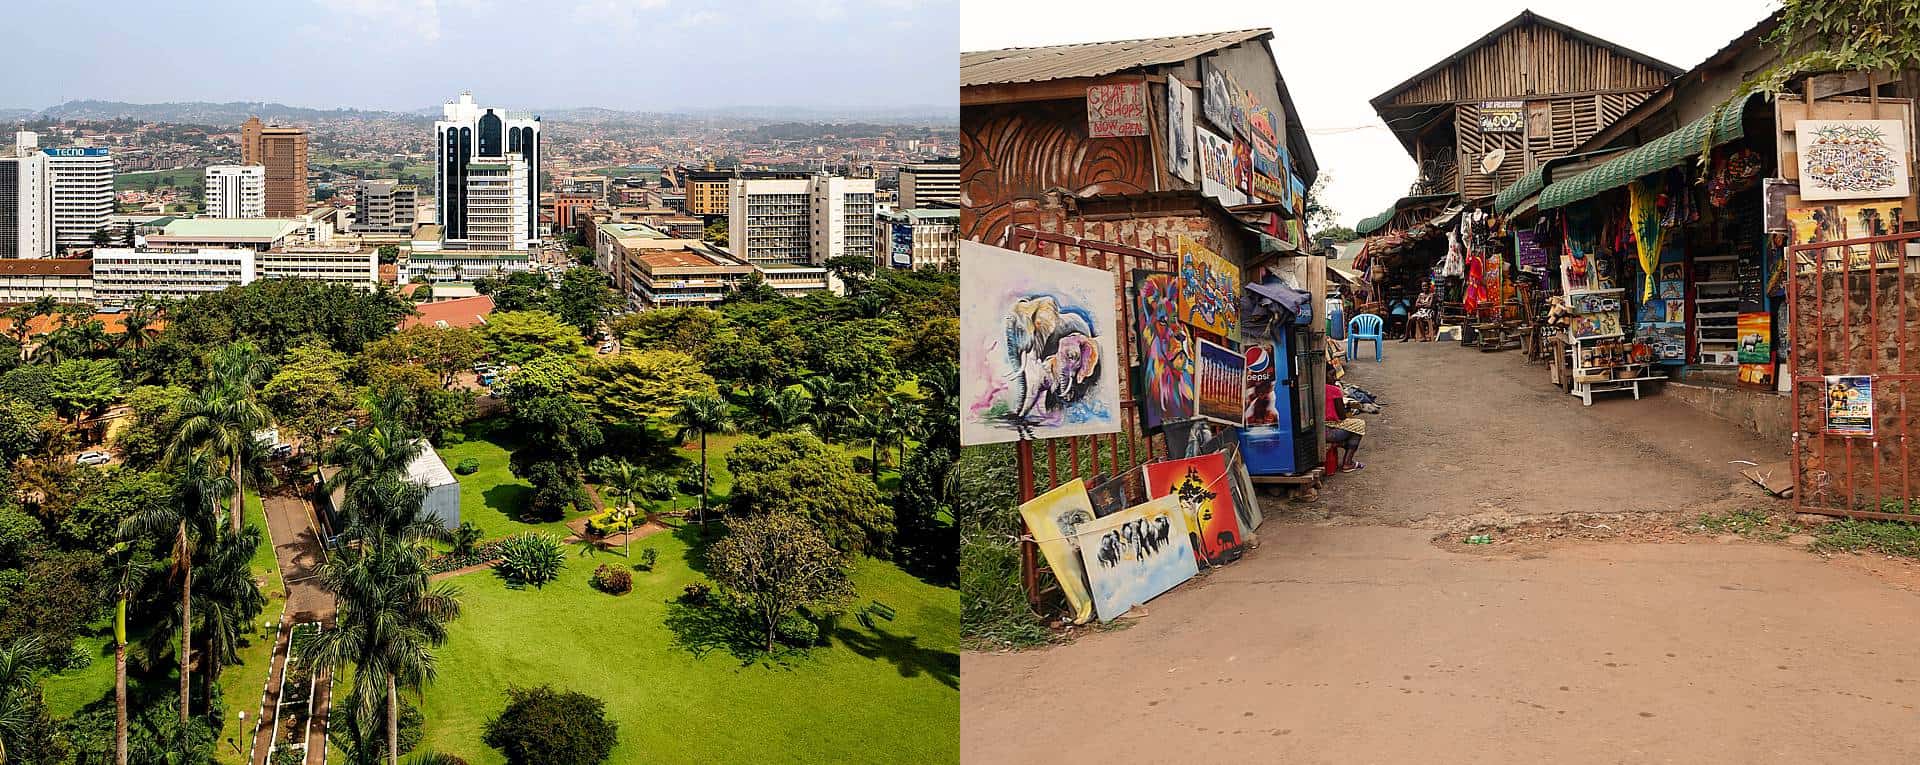 Kampala Tour Activities & City Attractions